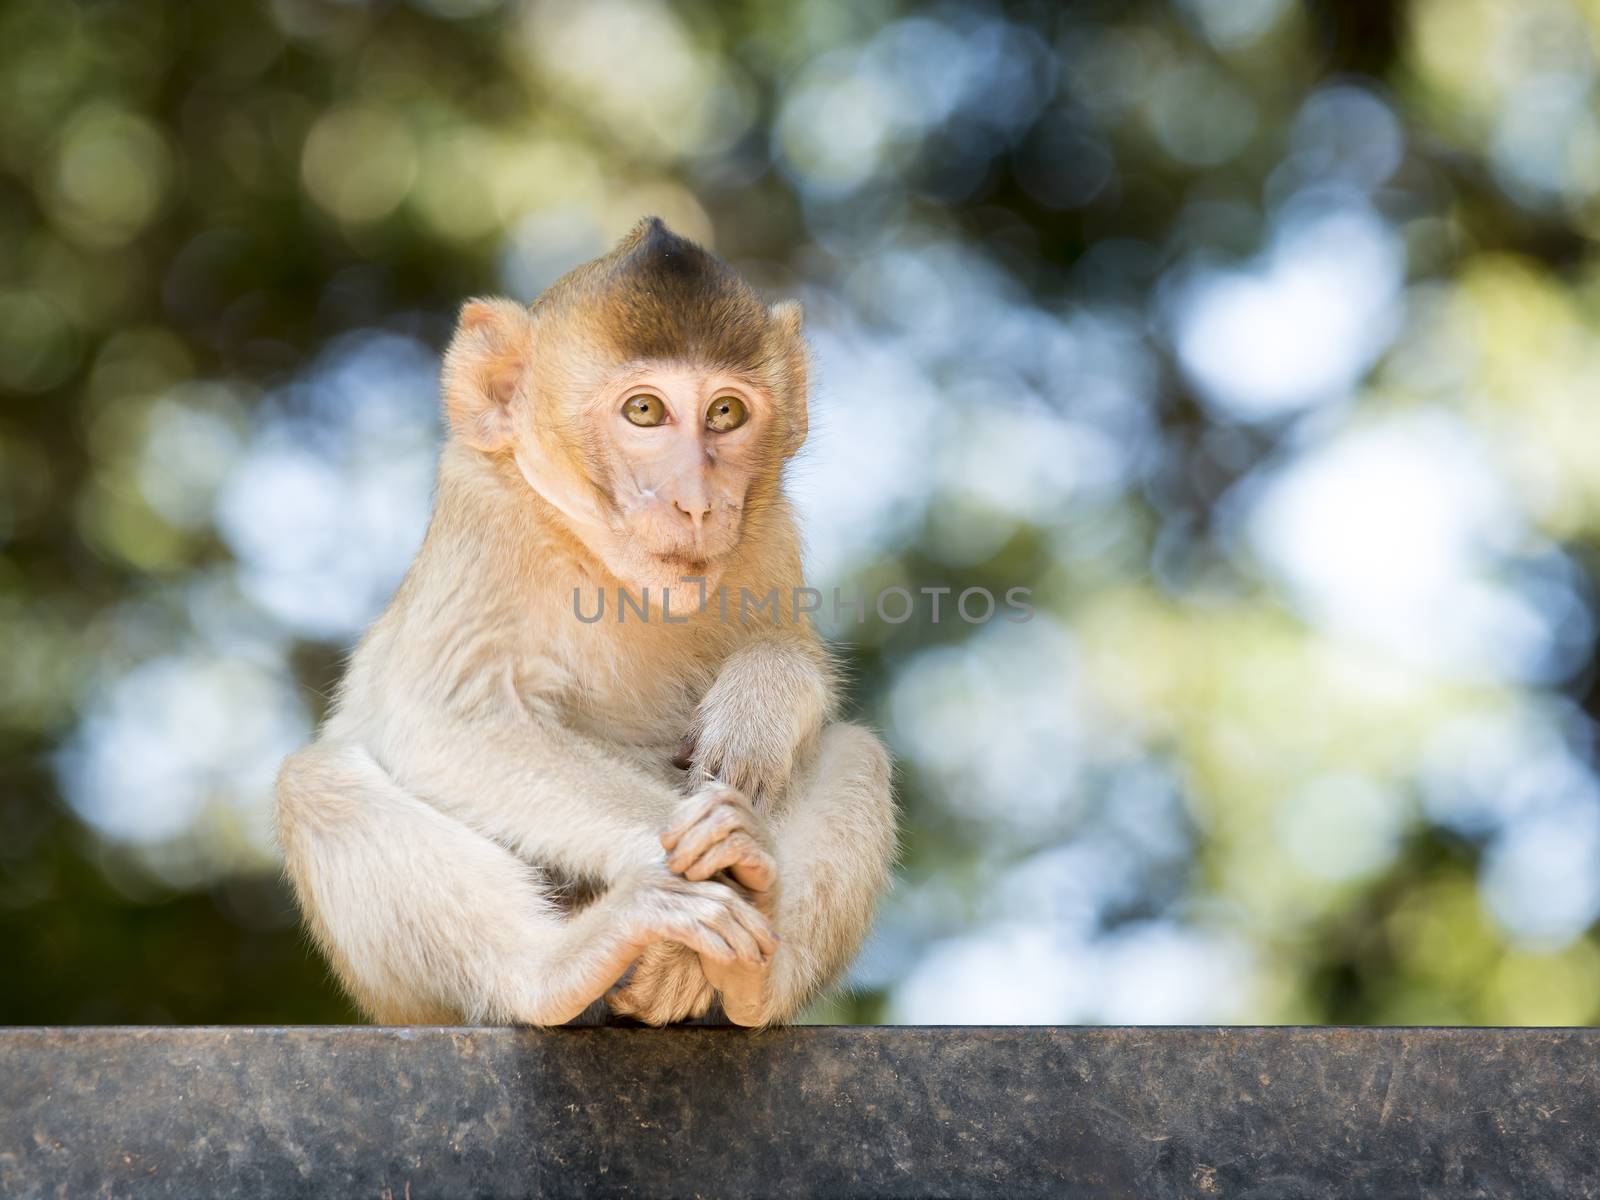 Baby Monkey by Chattranusorn09